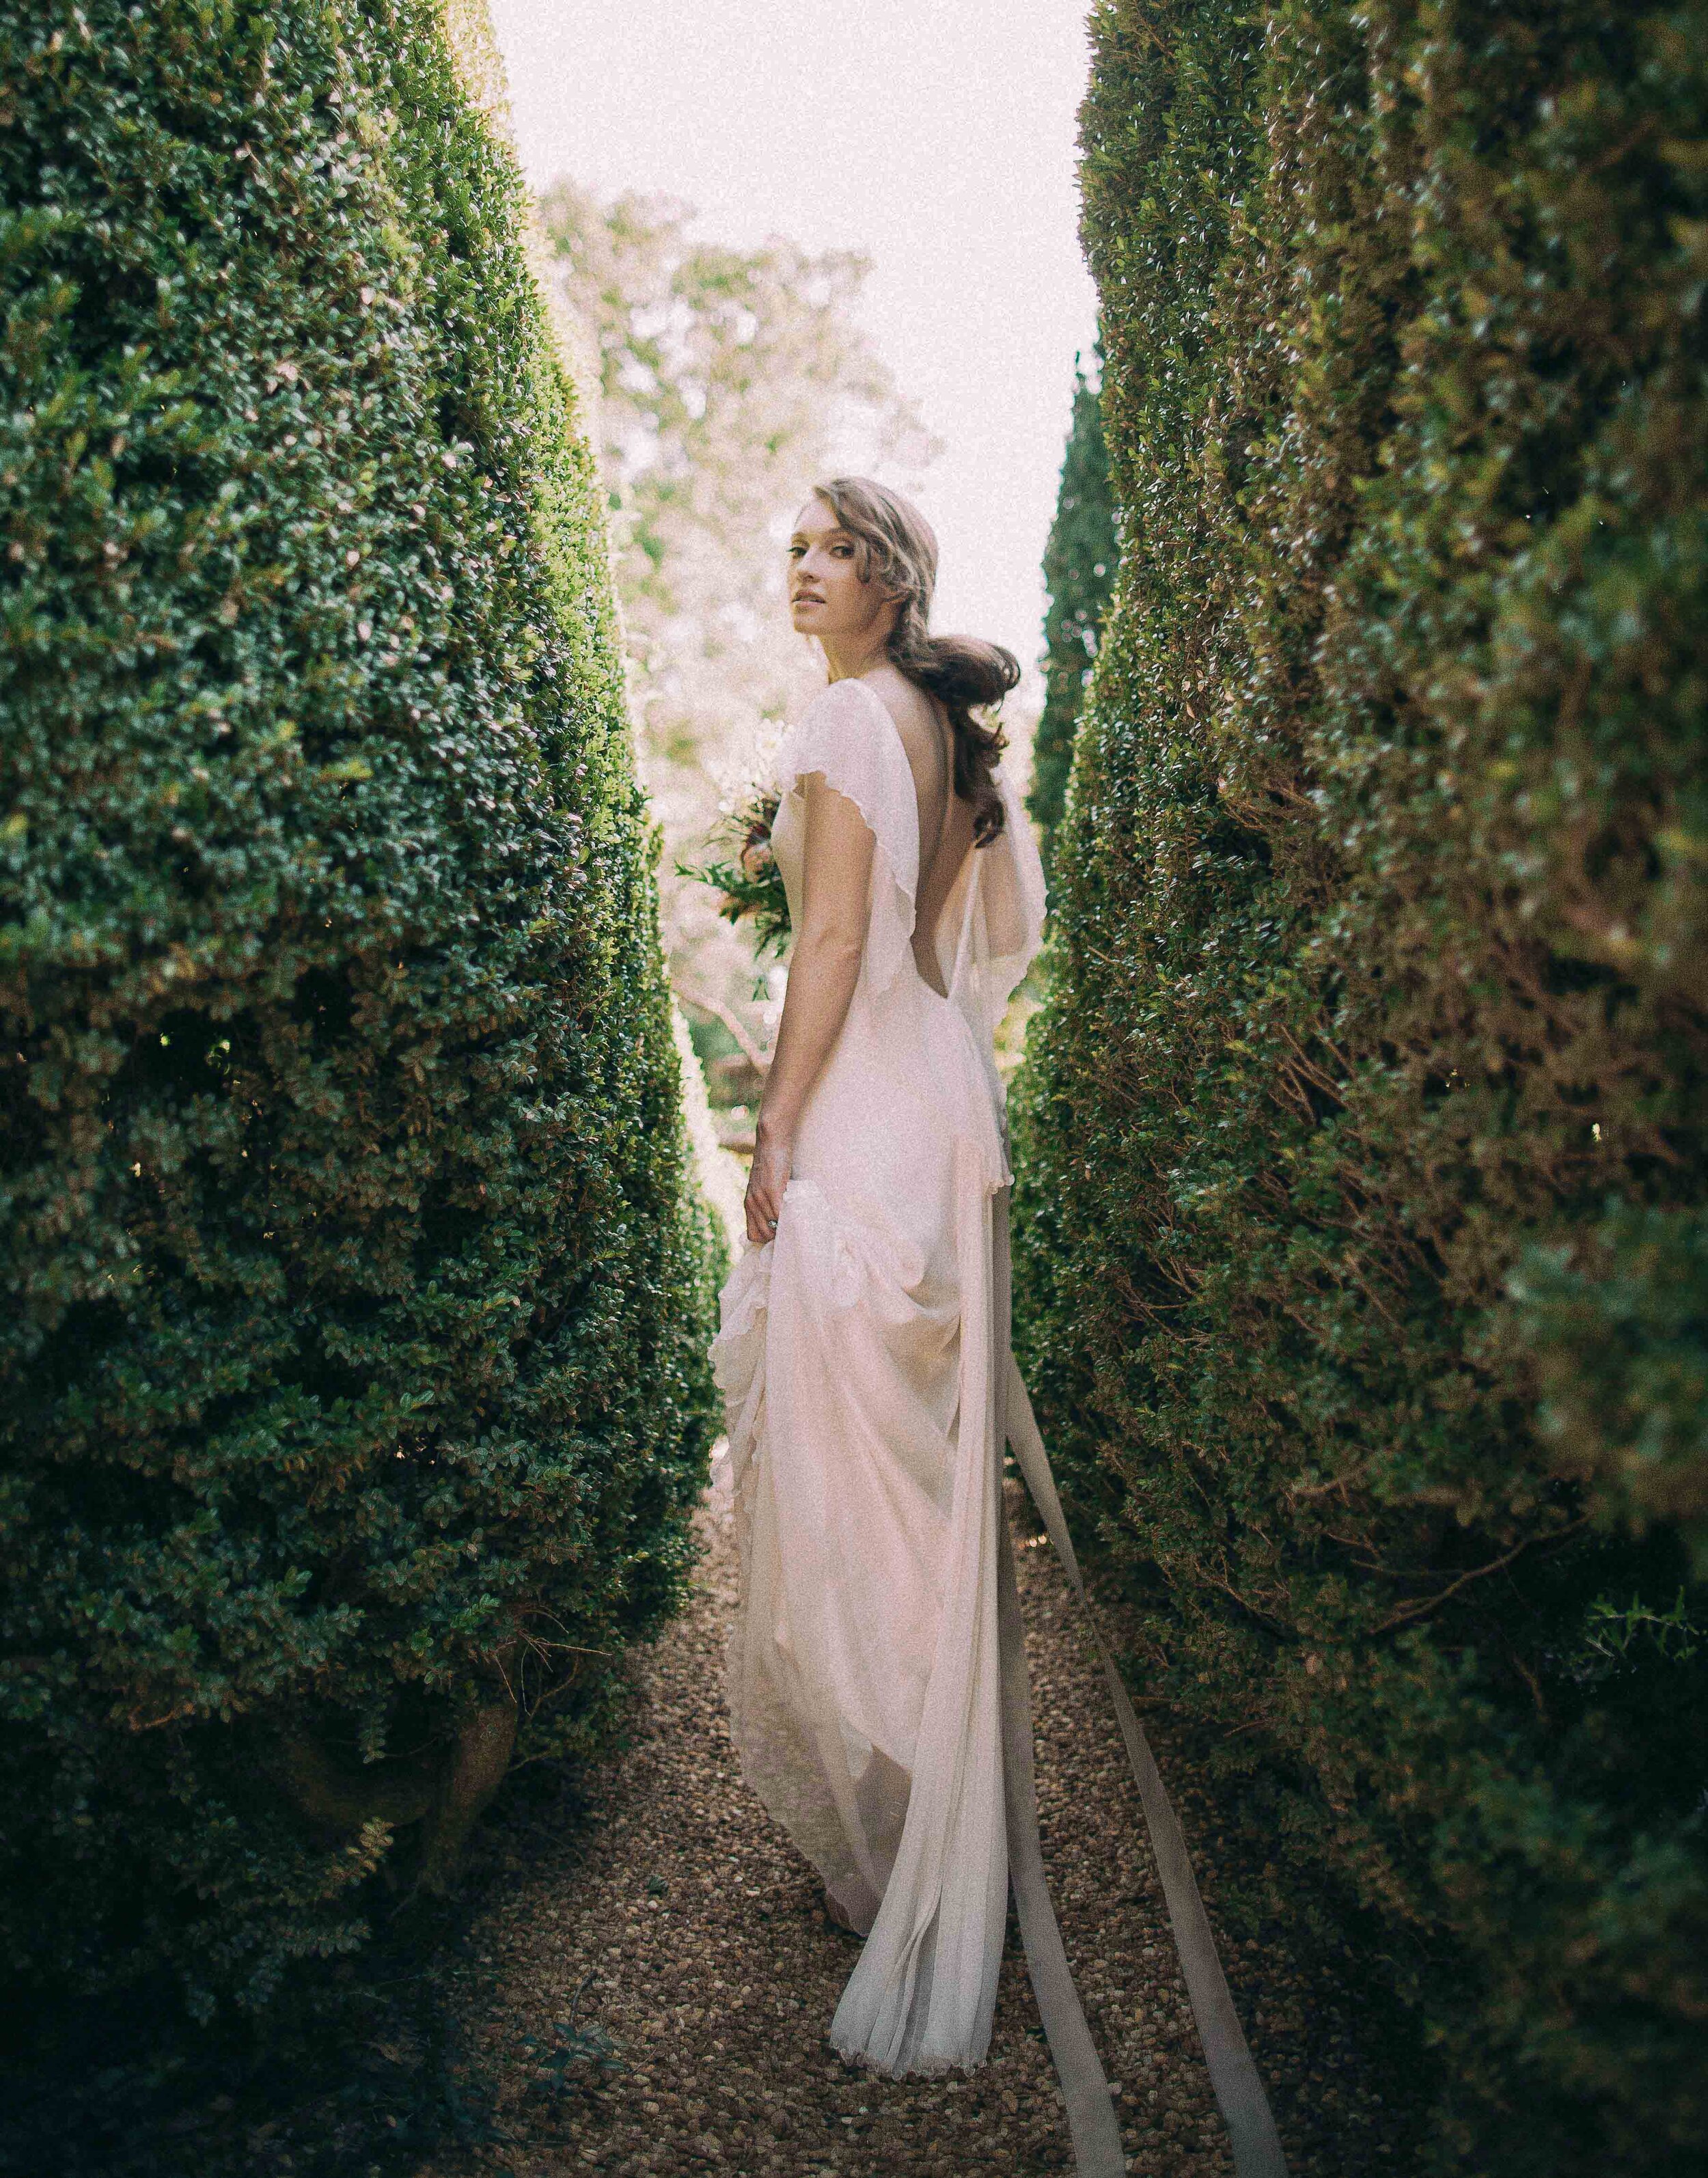 Romantic bride walking through gardens